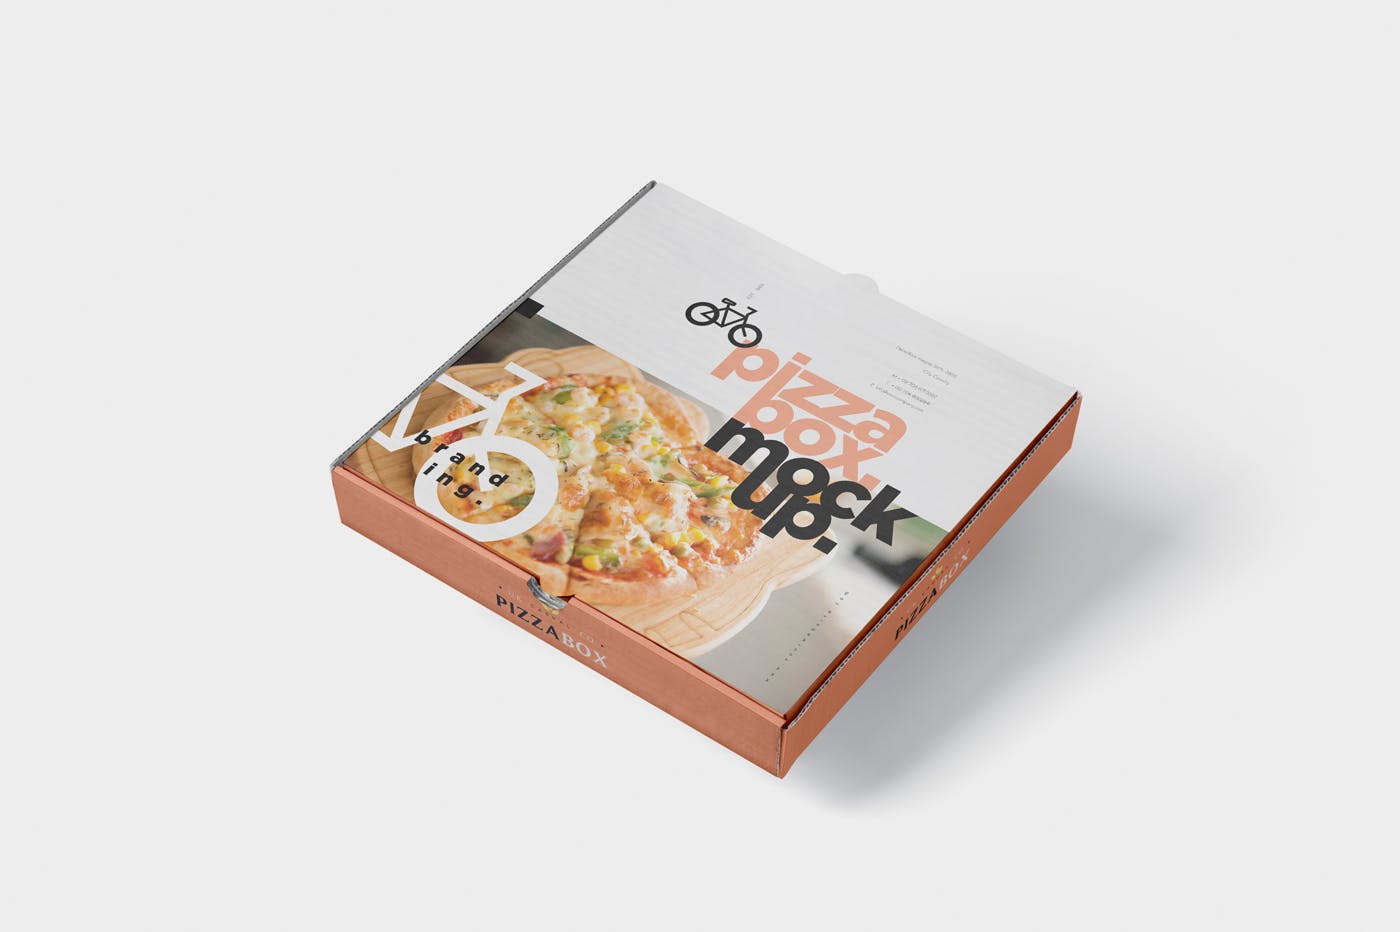 披萨外带包装纸盒设计图样机 Pizza Box Mock-Up – Grocery Store Edition插图(4)